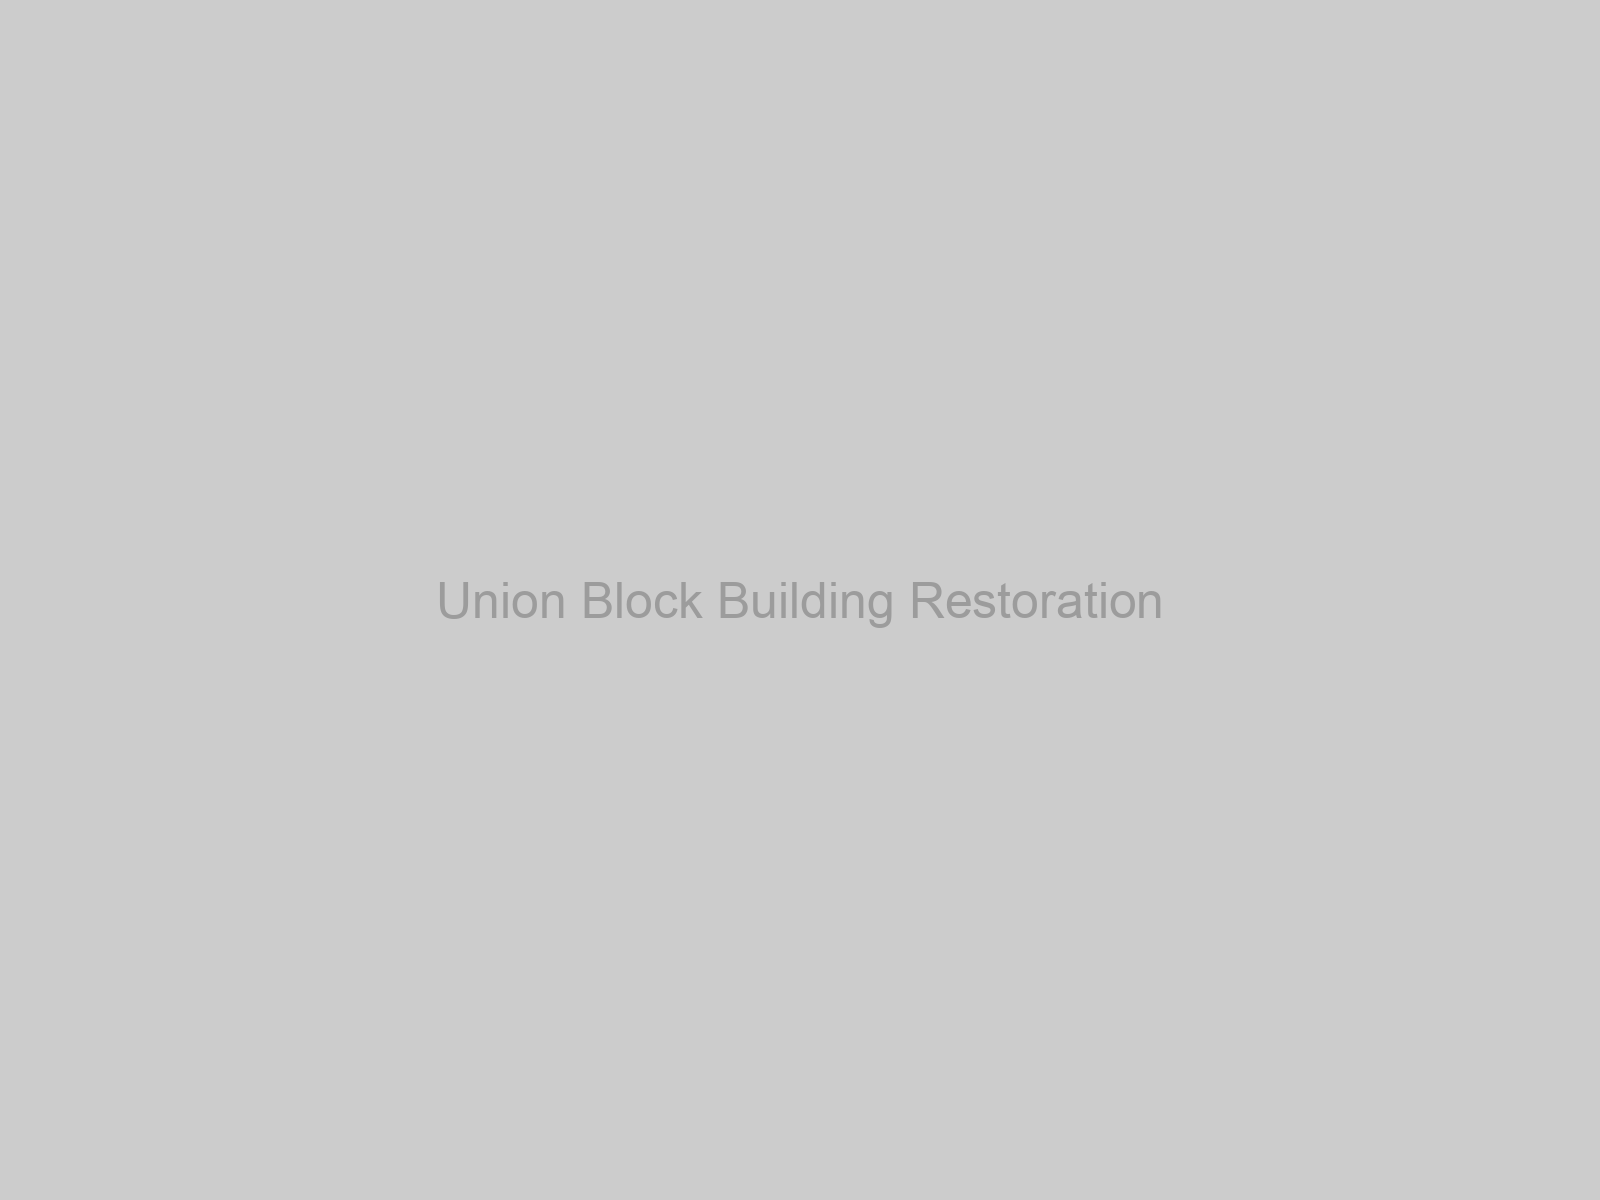 Union Block Building Restoration